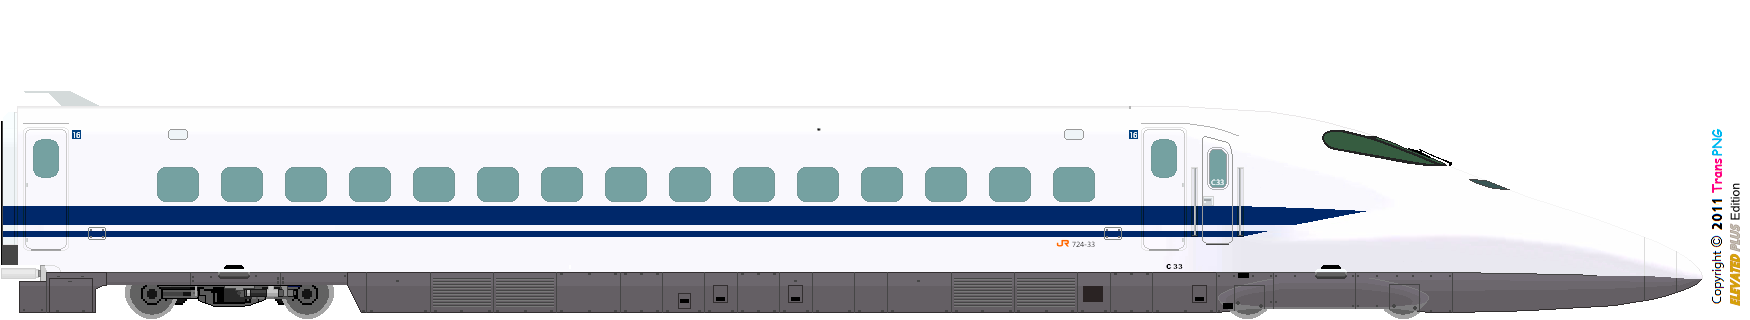 [9010] Central Japan Railway 52286607302_da10d29018_o